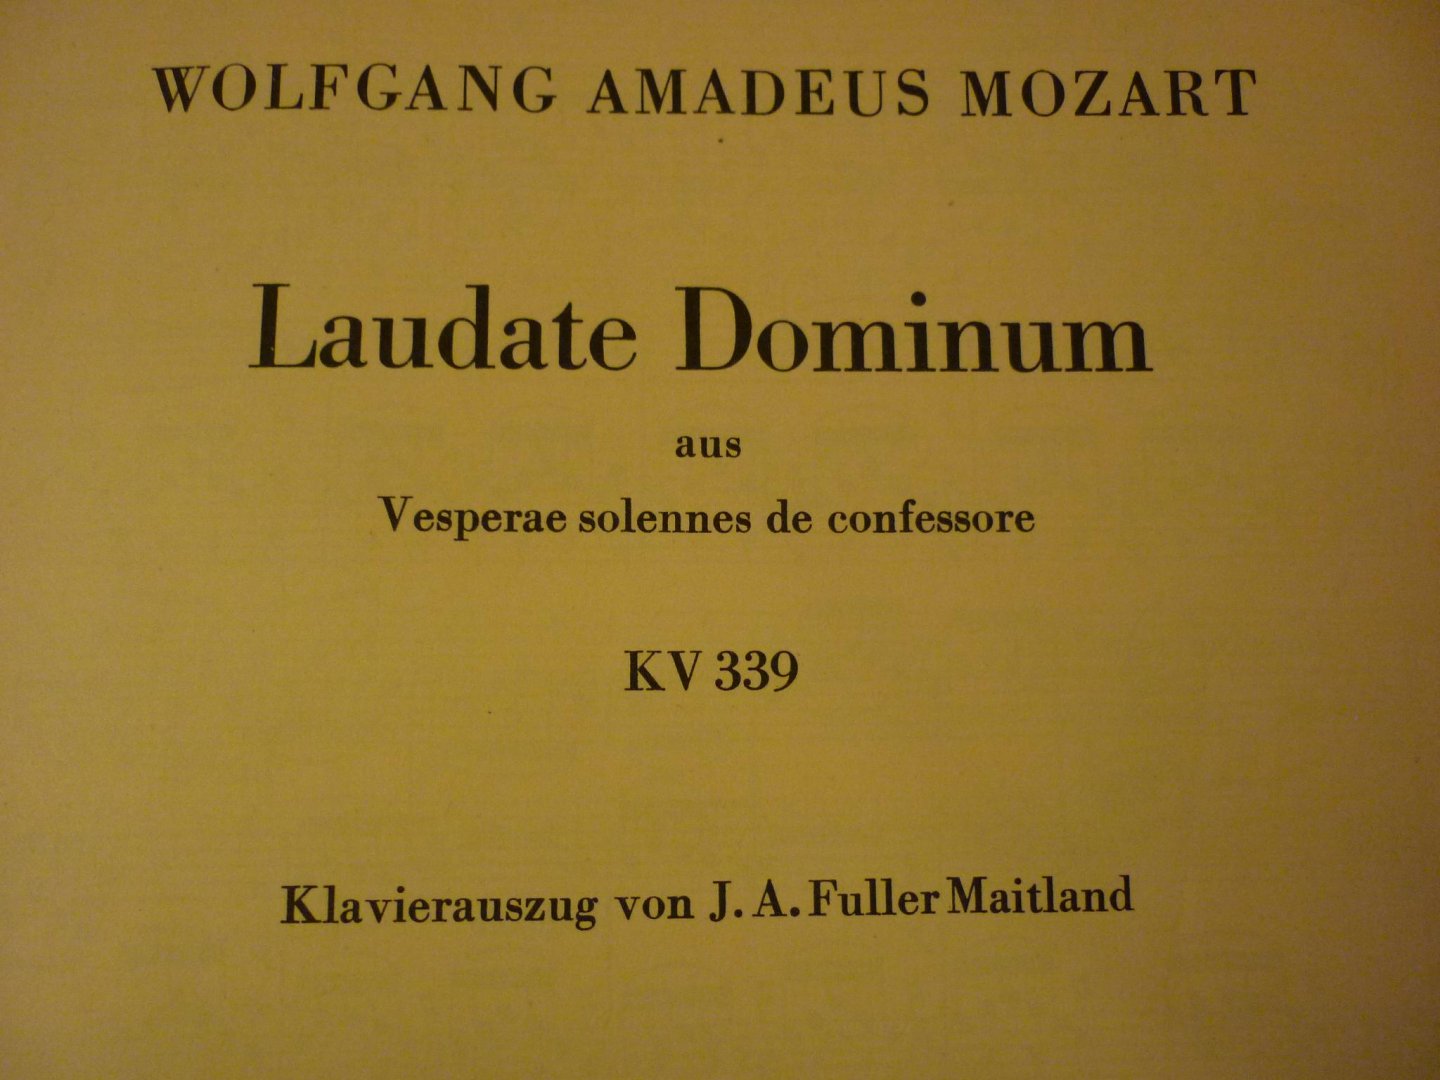 Mozart. W.A. (1756 – 1791) - Laudate Dominum; aus ,,Vesperae solennes de confessore"; fur Sopran, Chor, Orchester und Orgel; KV 339;  Klavierauszug